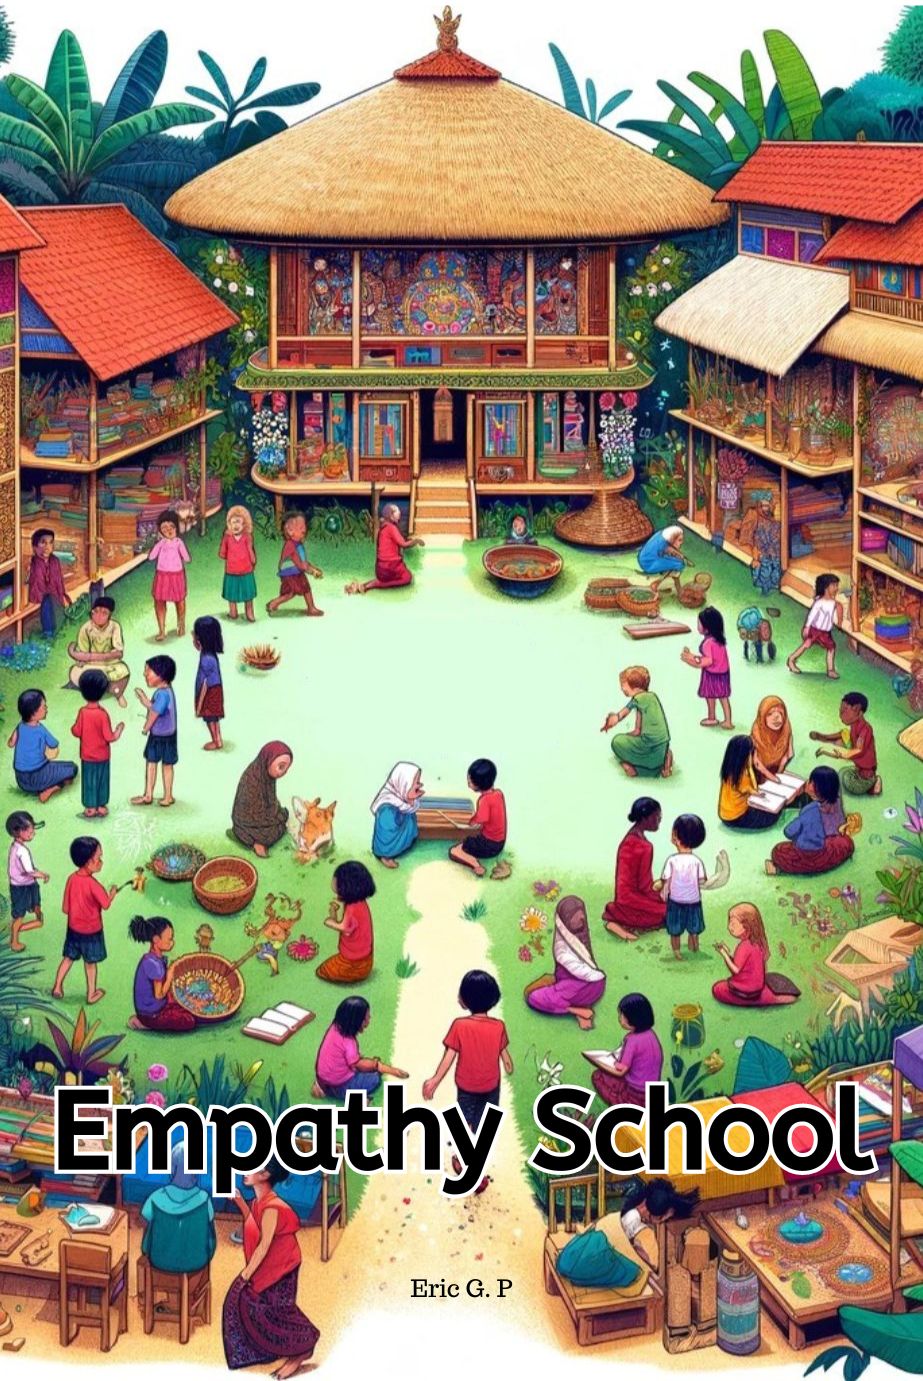 Empathy School